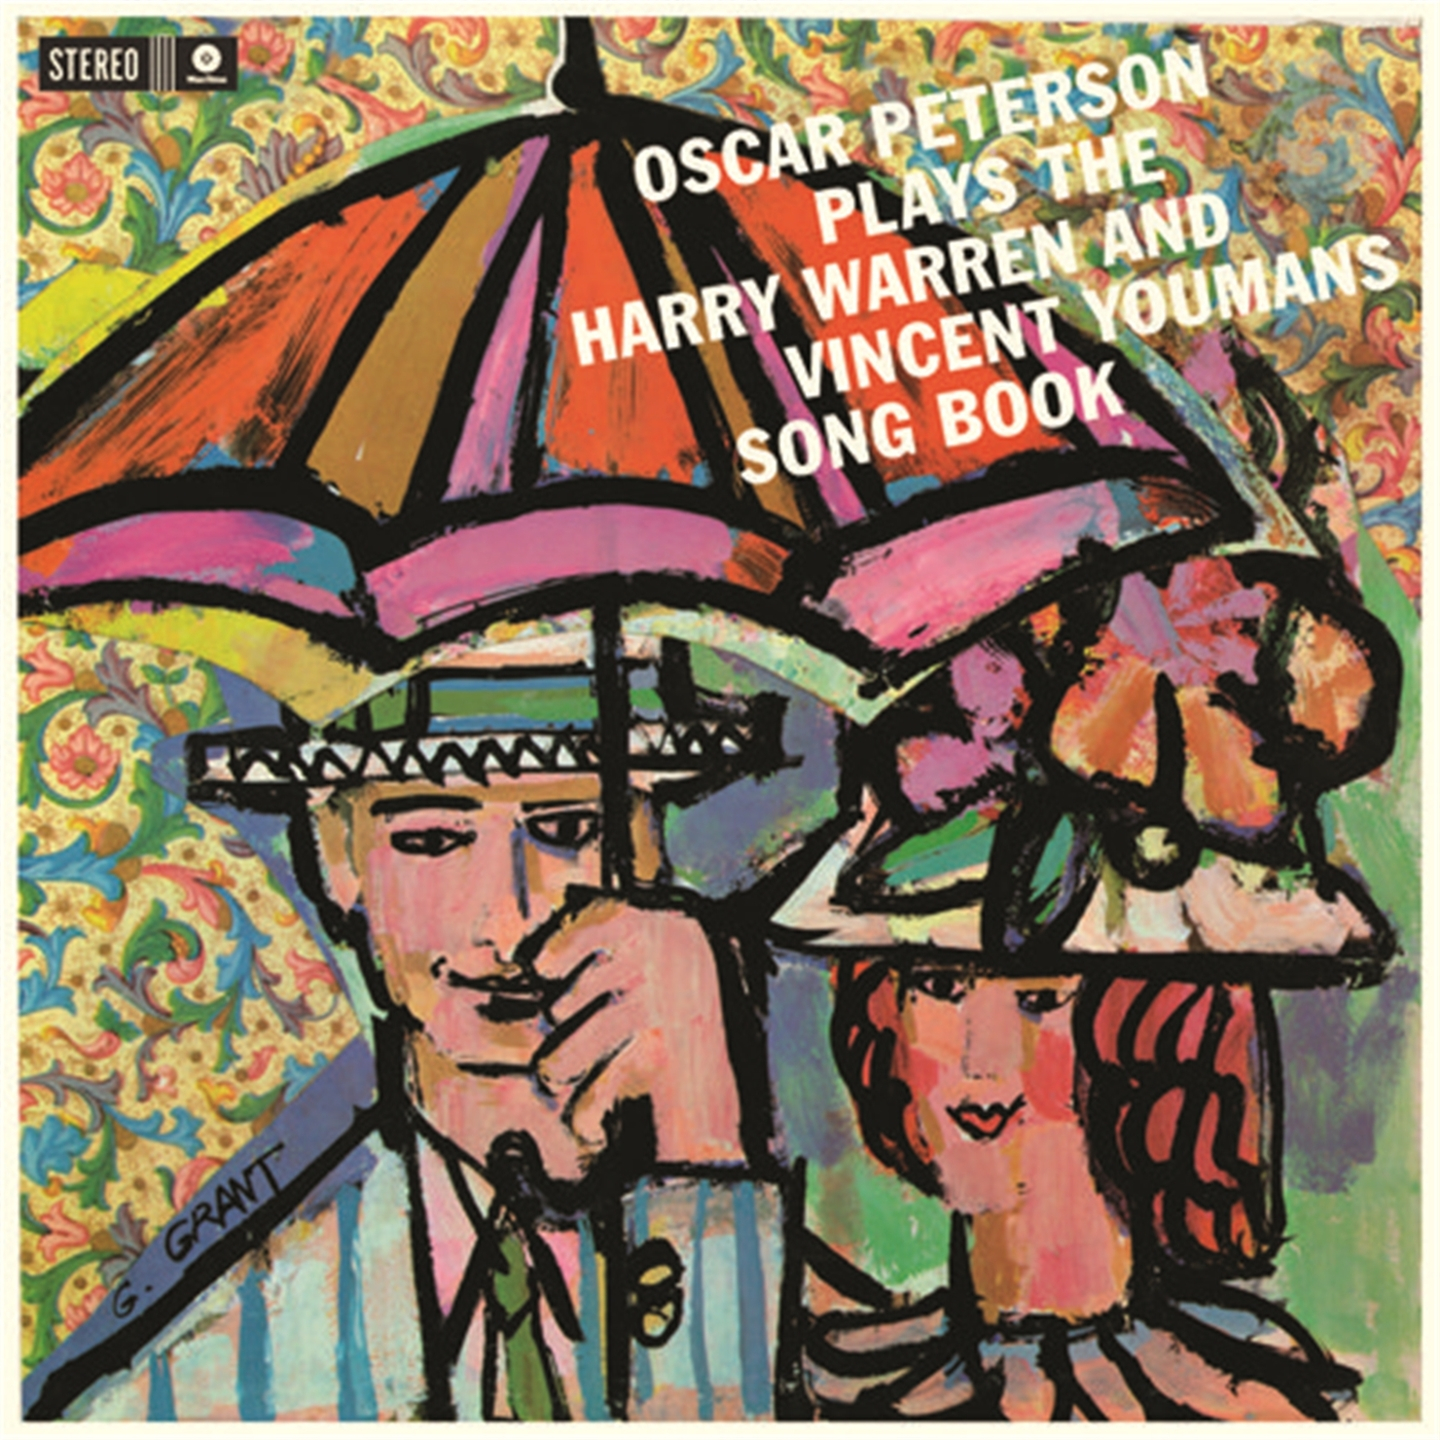 PLAYS THE HARRY WARREN & VINCENT YOUMANS SONG BOOK [LP]